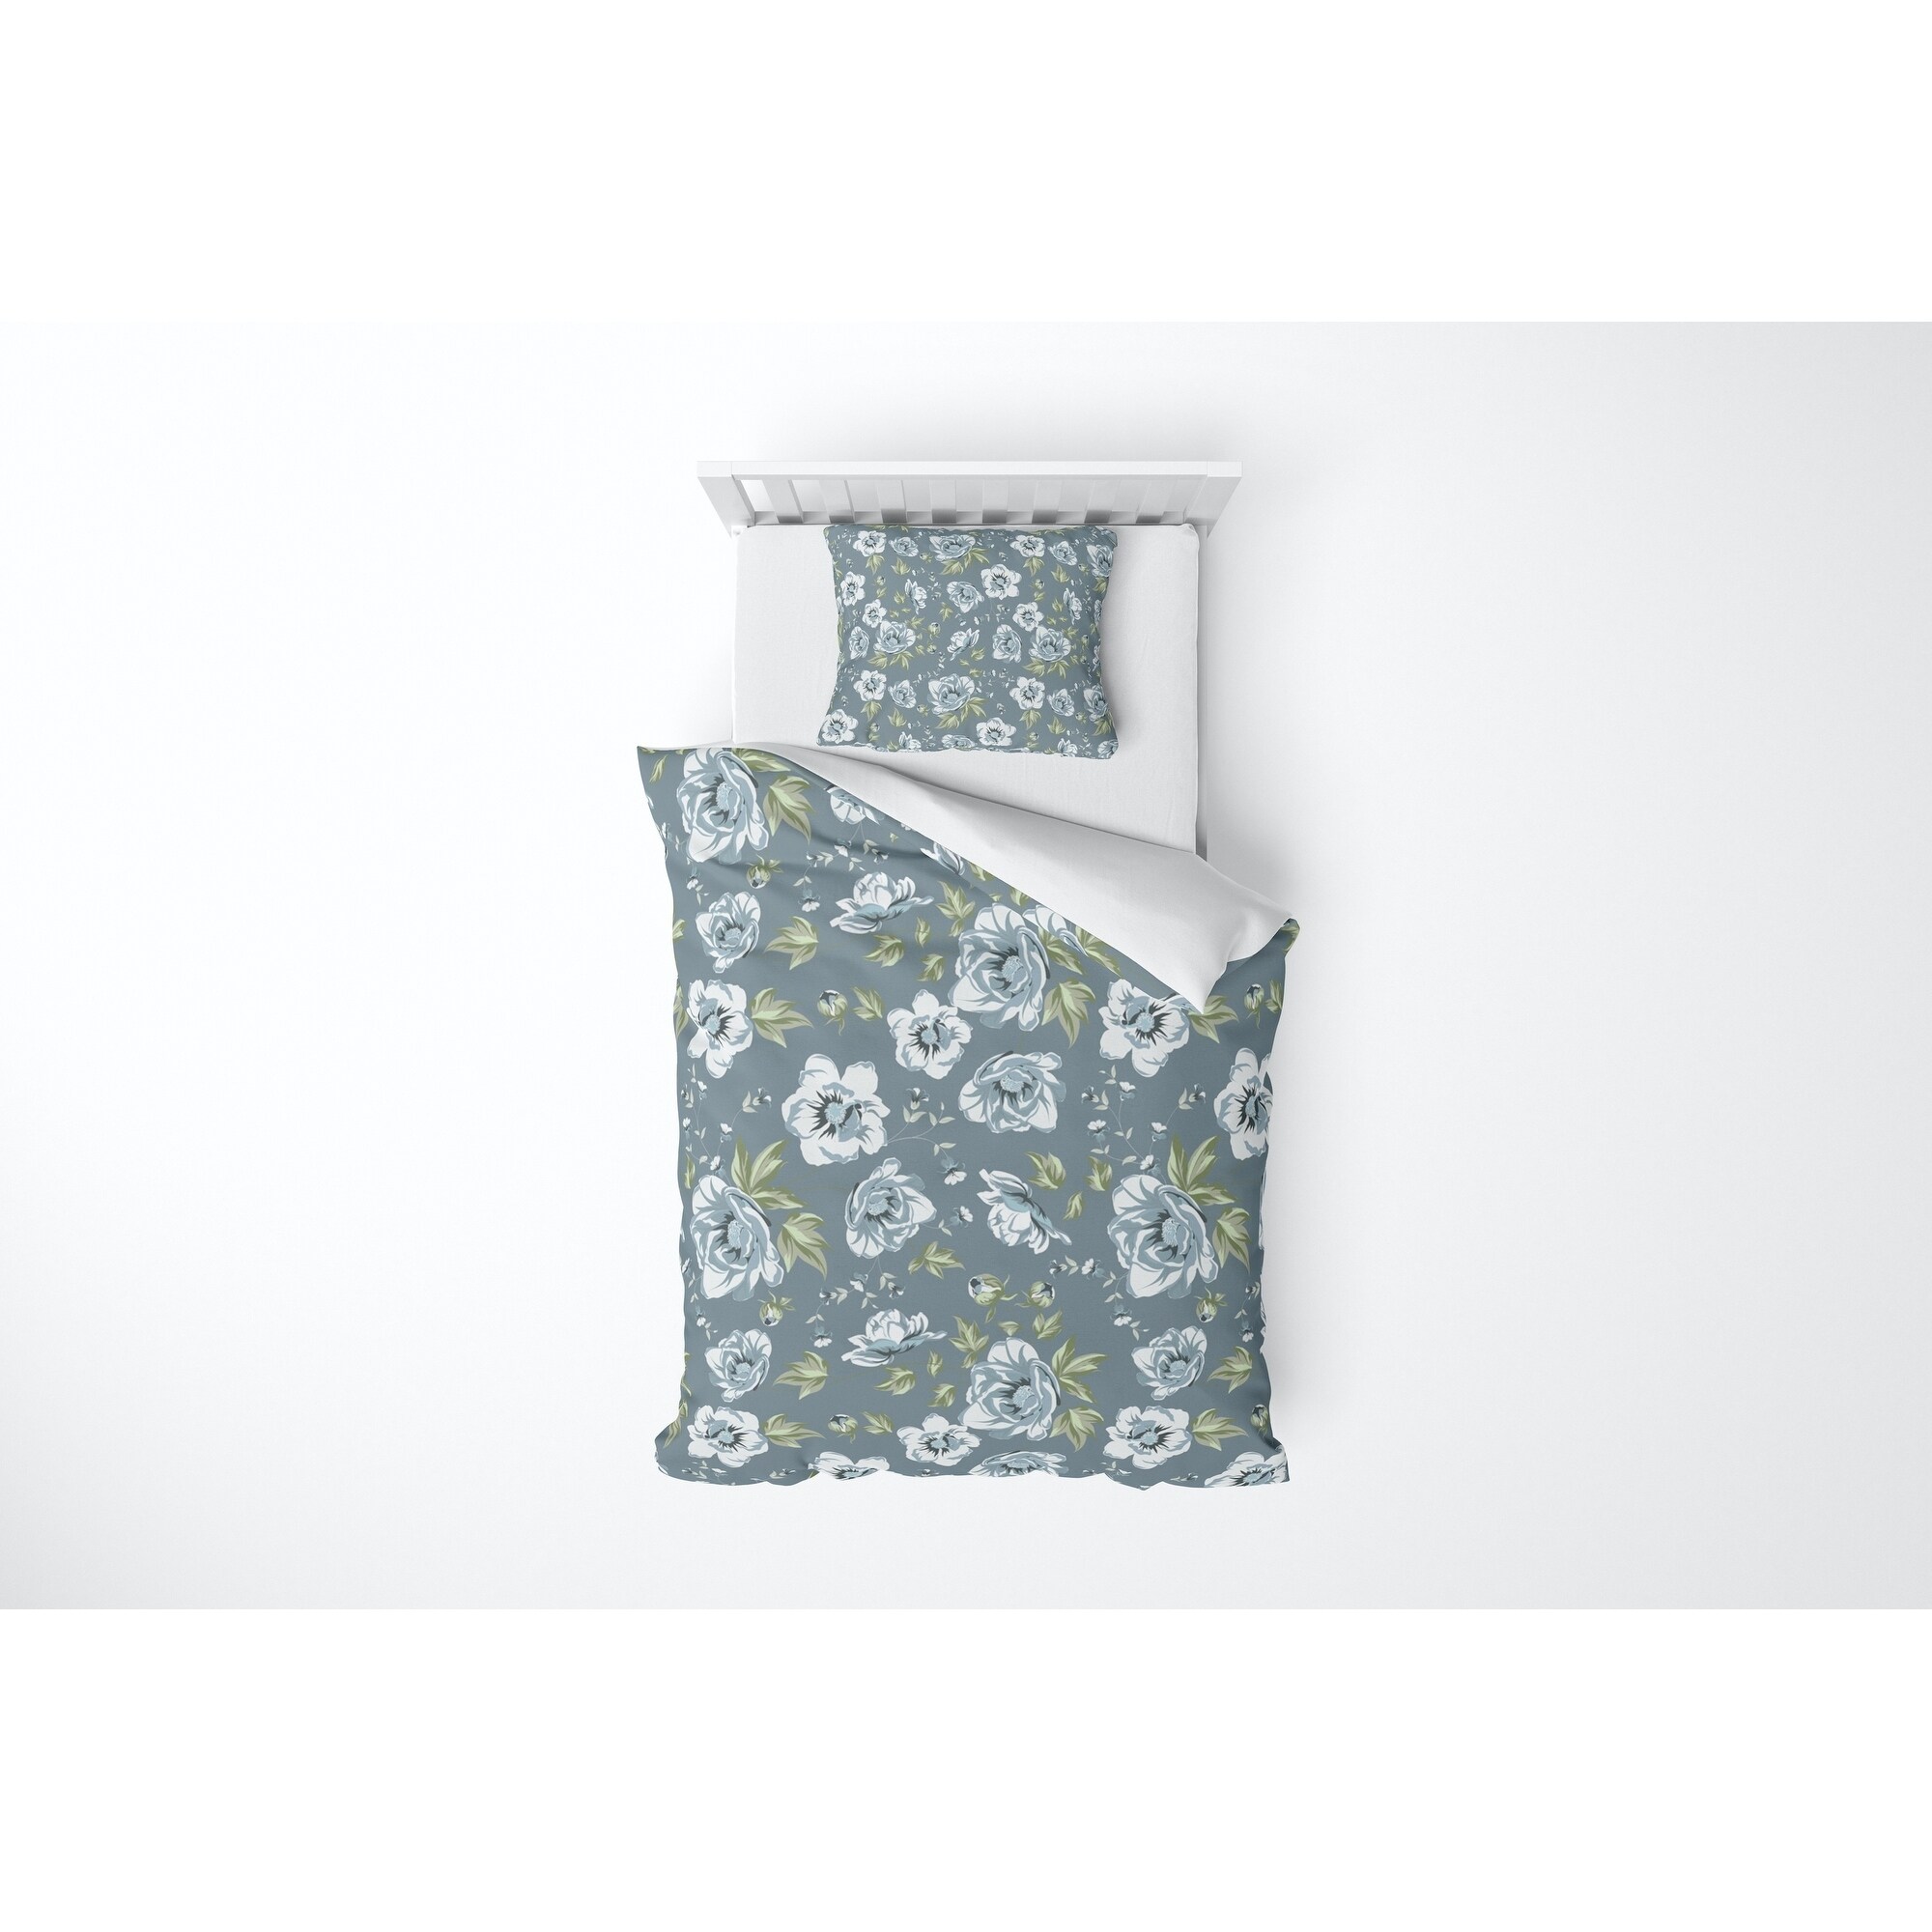 COLETTE WHITE FLOWER ON BLUE Comforter By Kavka Designs